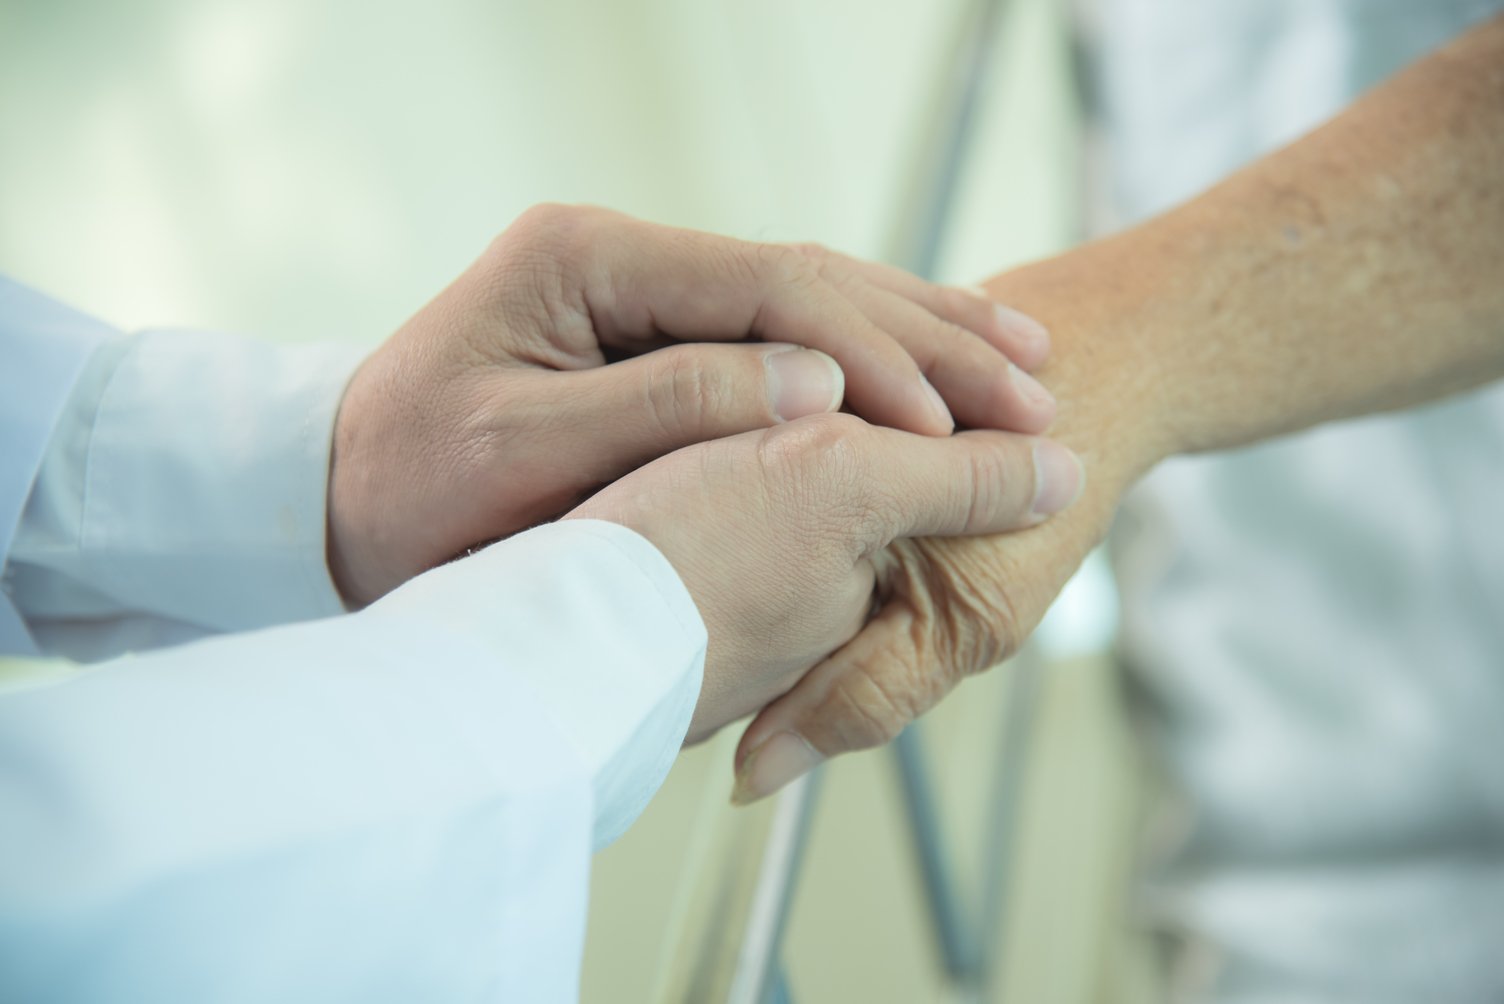 Holding elderly patient's hand. | Photo: Shutterstock